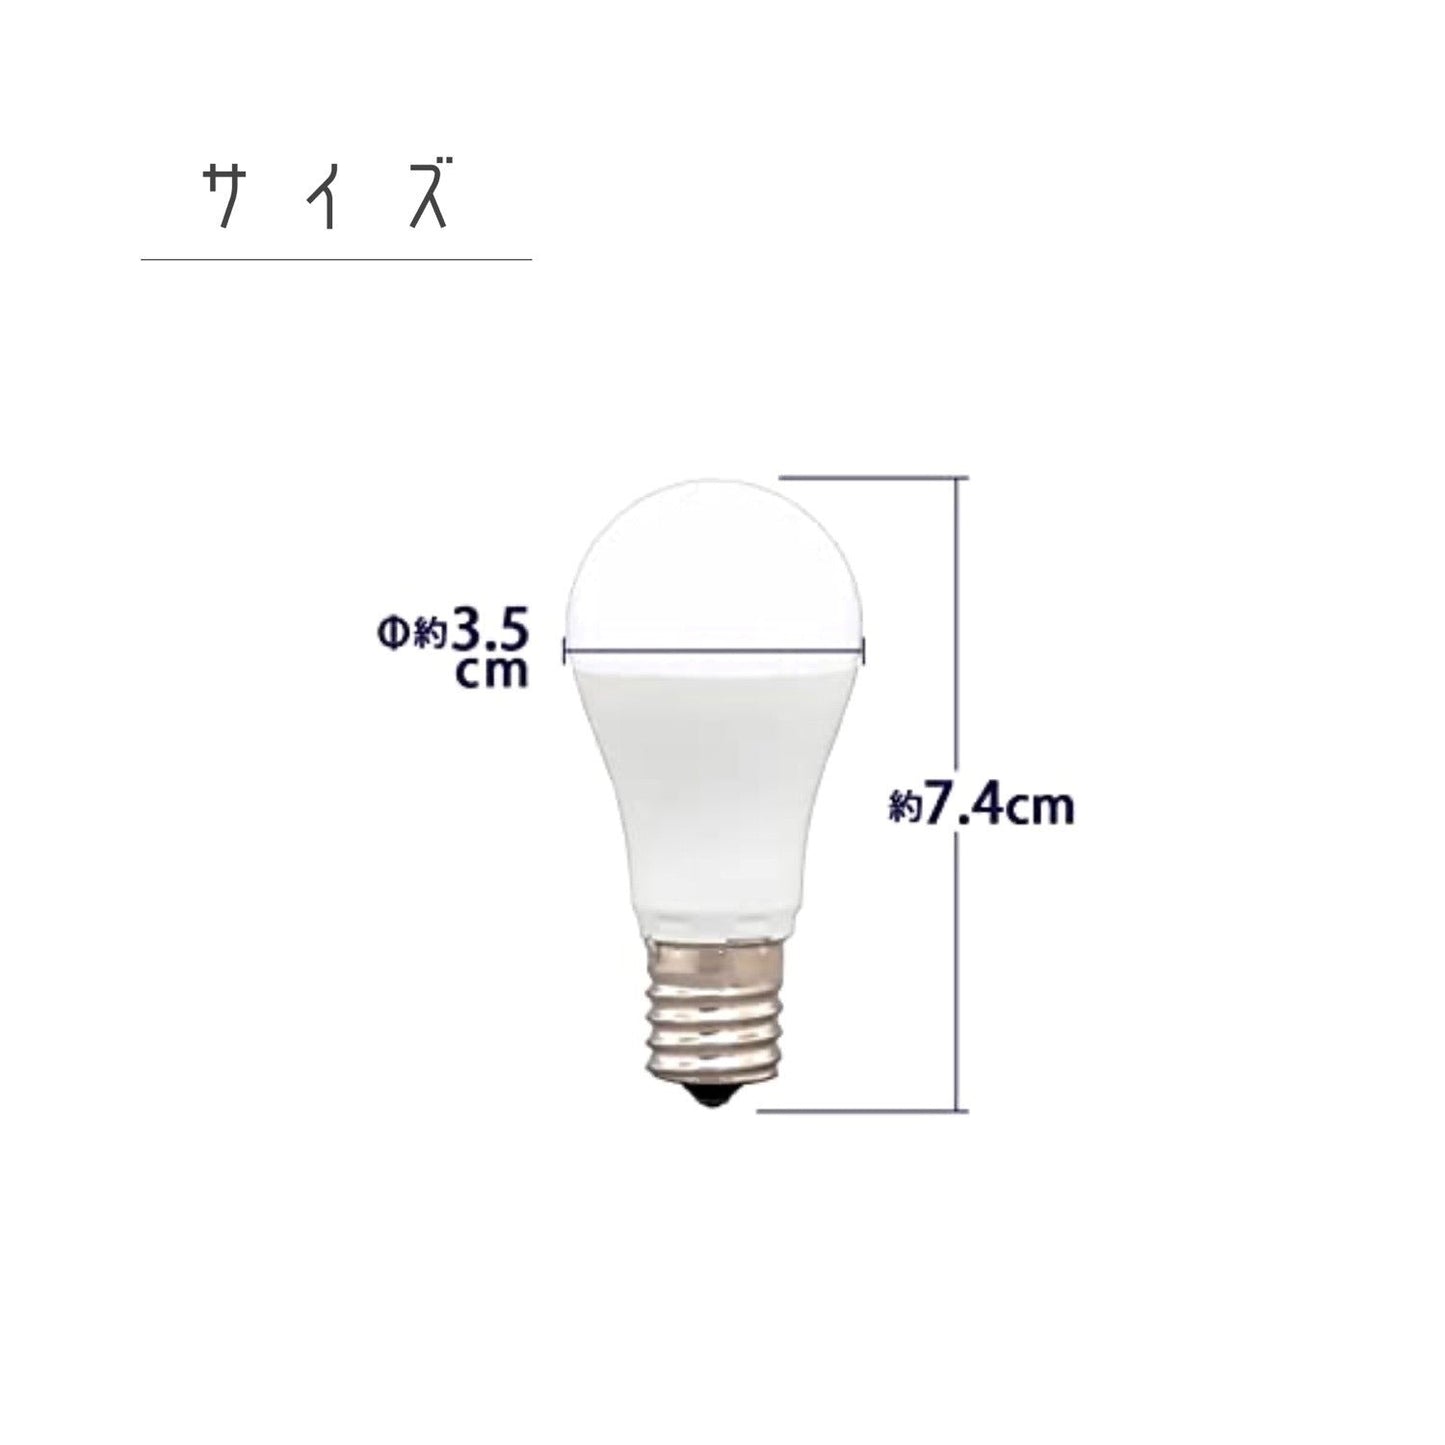 LED BULB_E17_white×１/LED昼白色_E17_１個